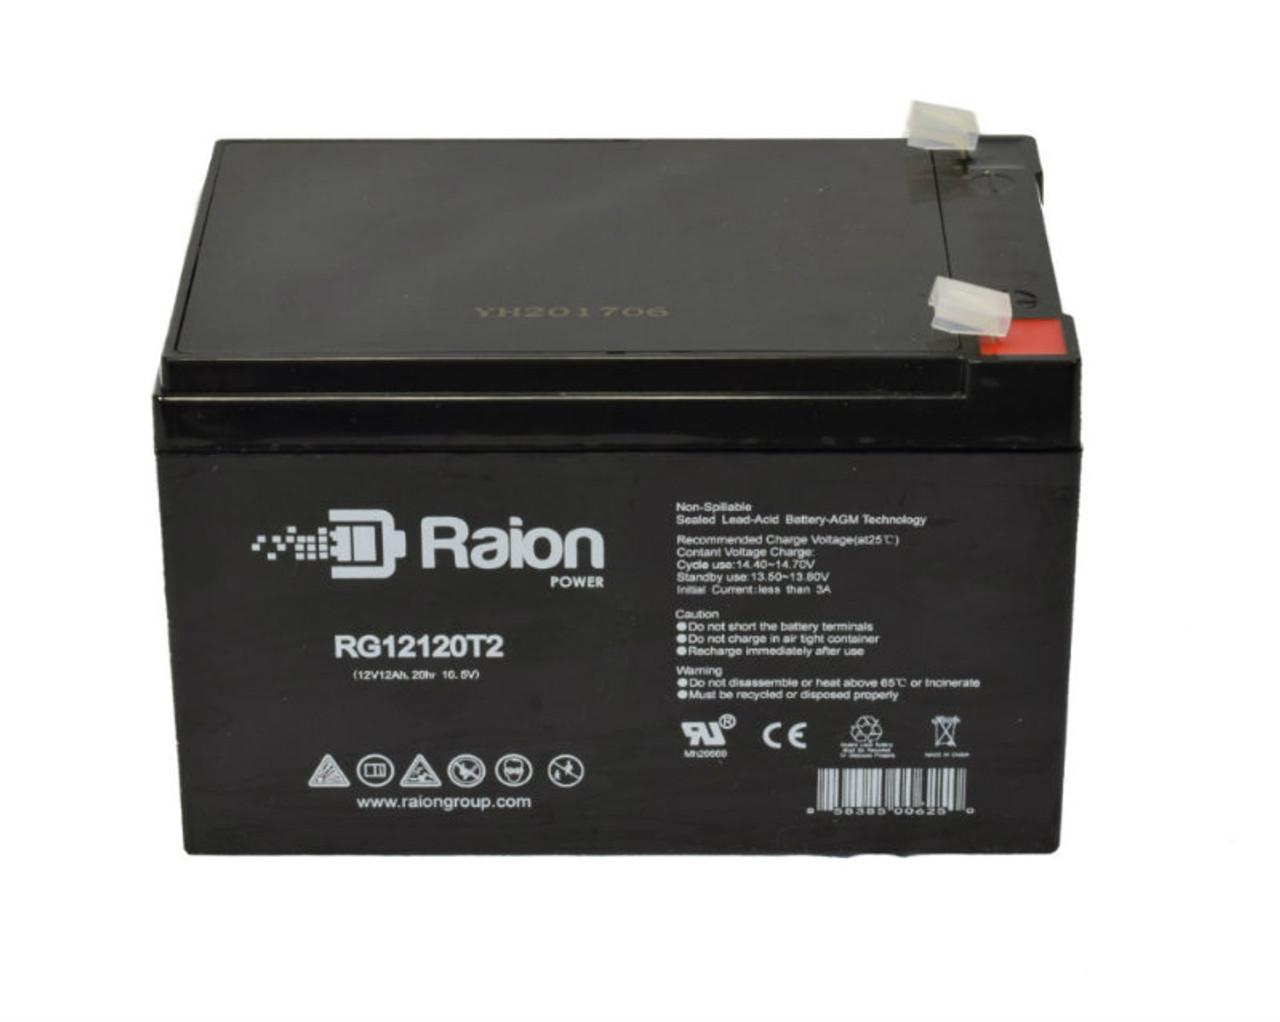 Raion Power RG12120T2 SLA Battery for Rhino SLA 10-12